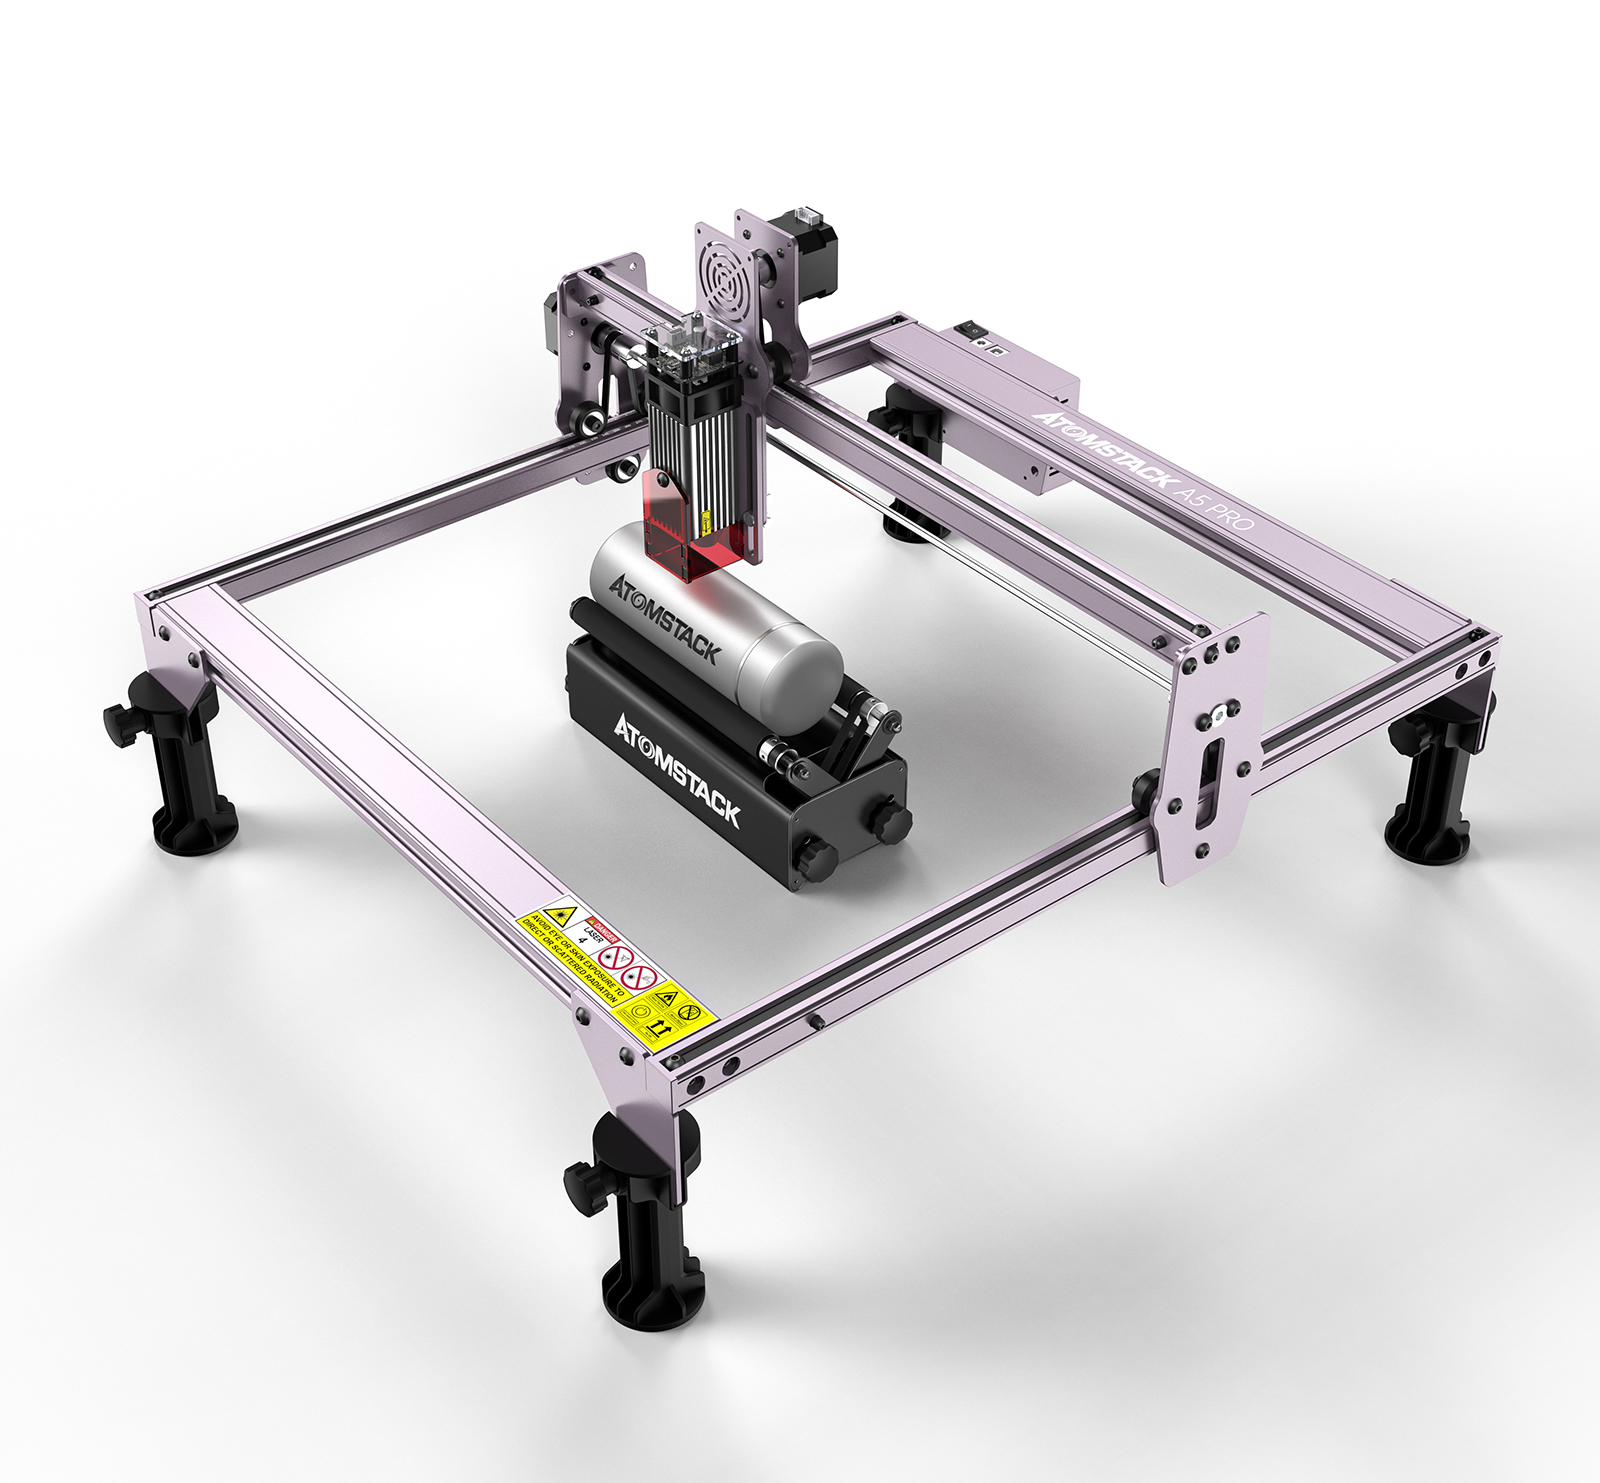 ATOMSTACK P9 desktop laser cutter and engraver - Geeky Gadgets